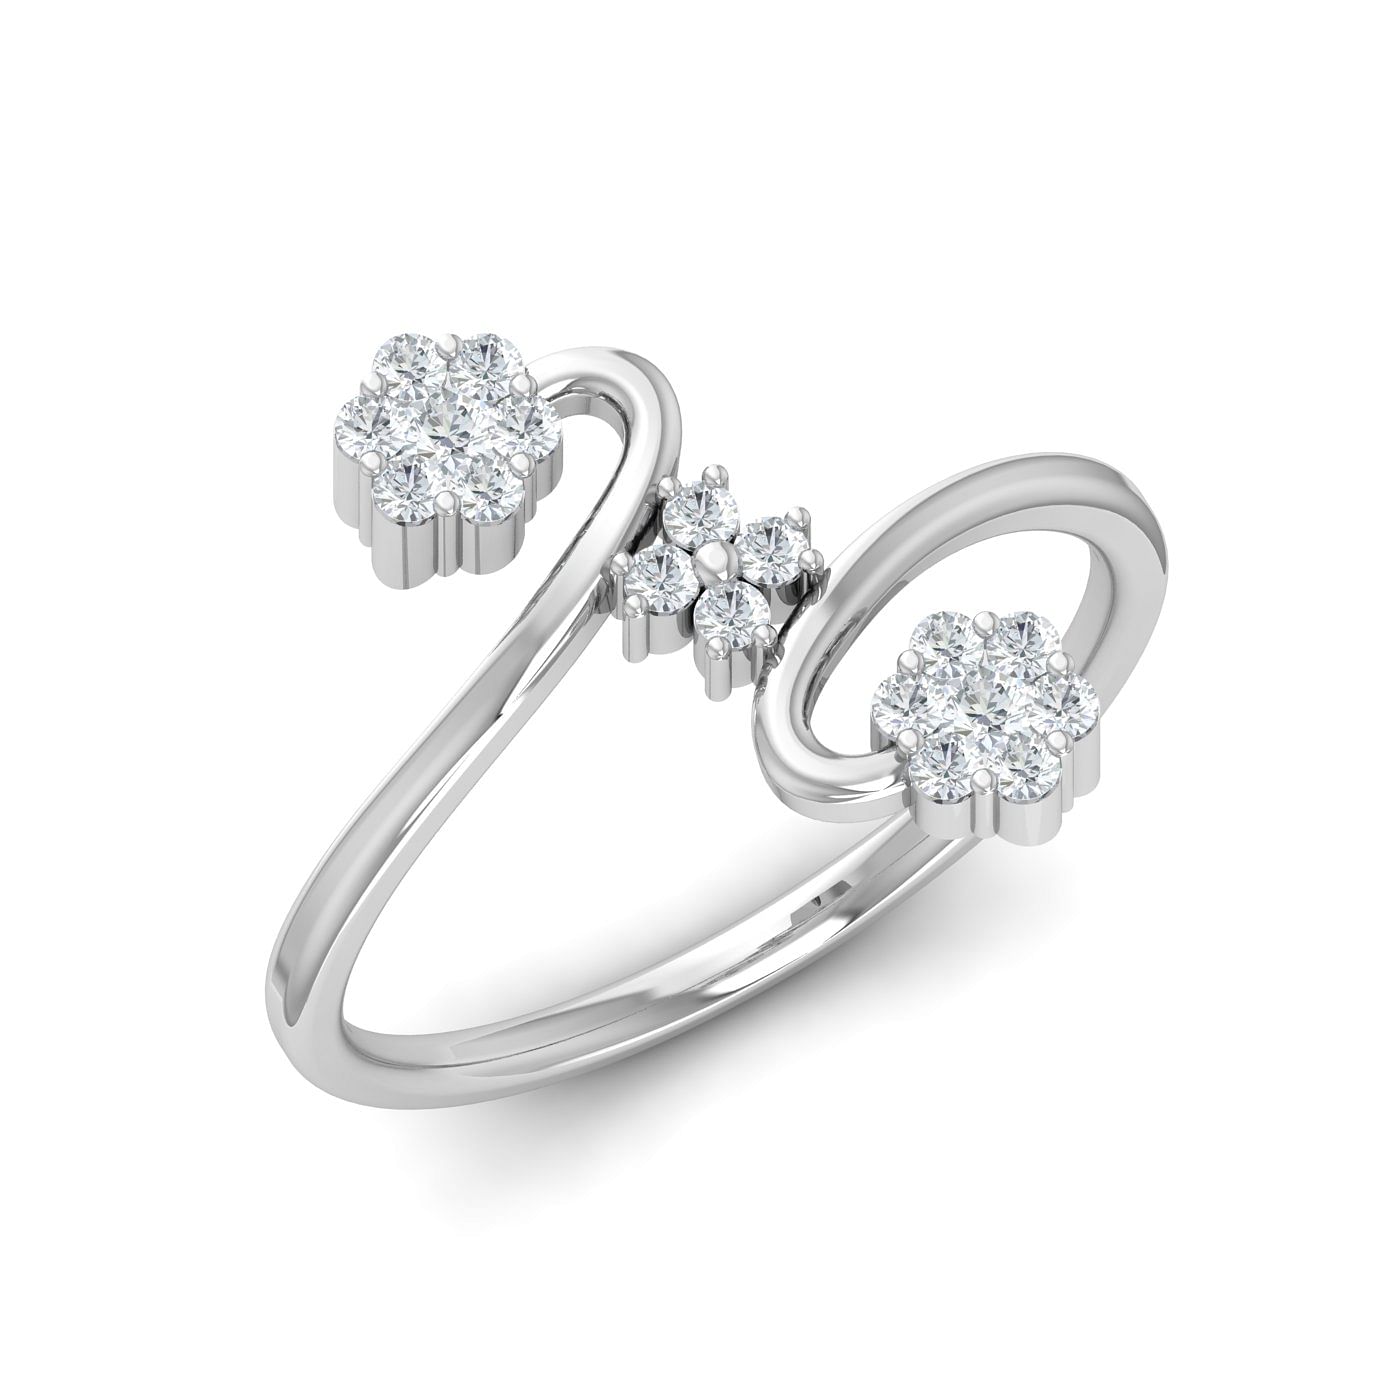 Three Flower Design Diamond Ring With White Gold